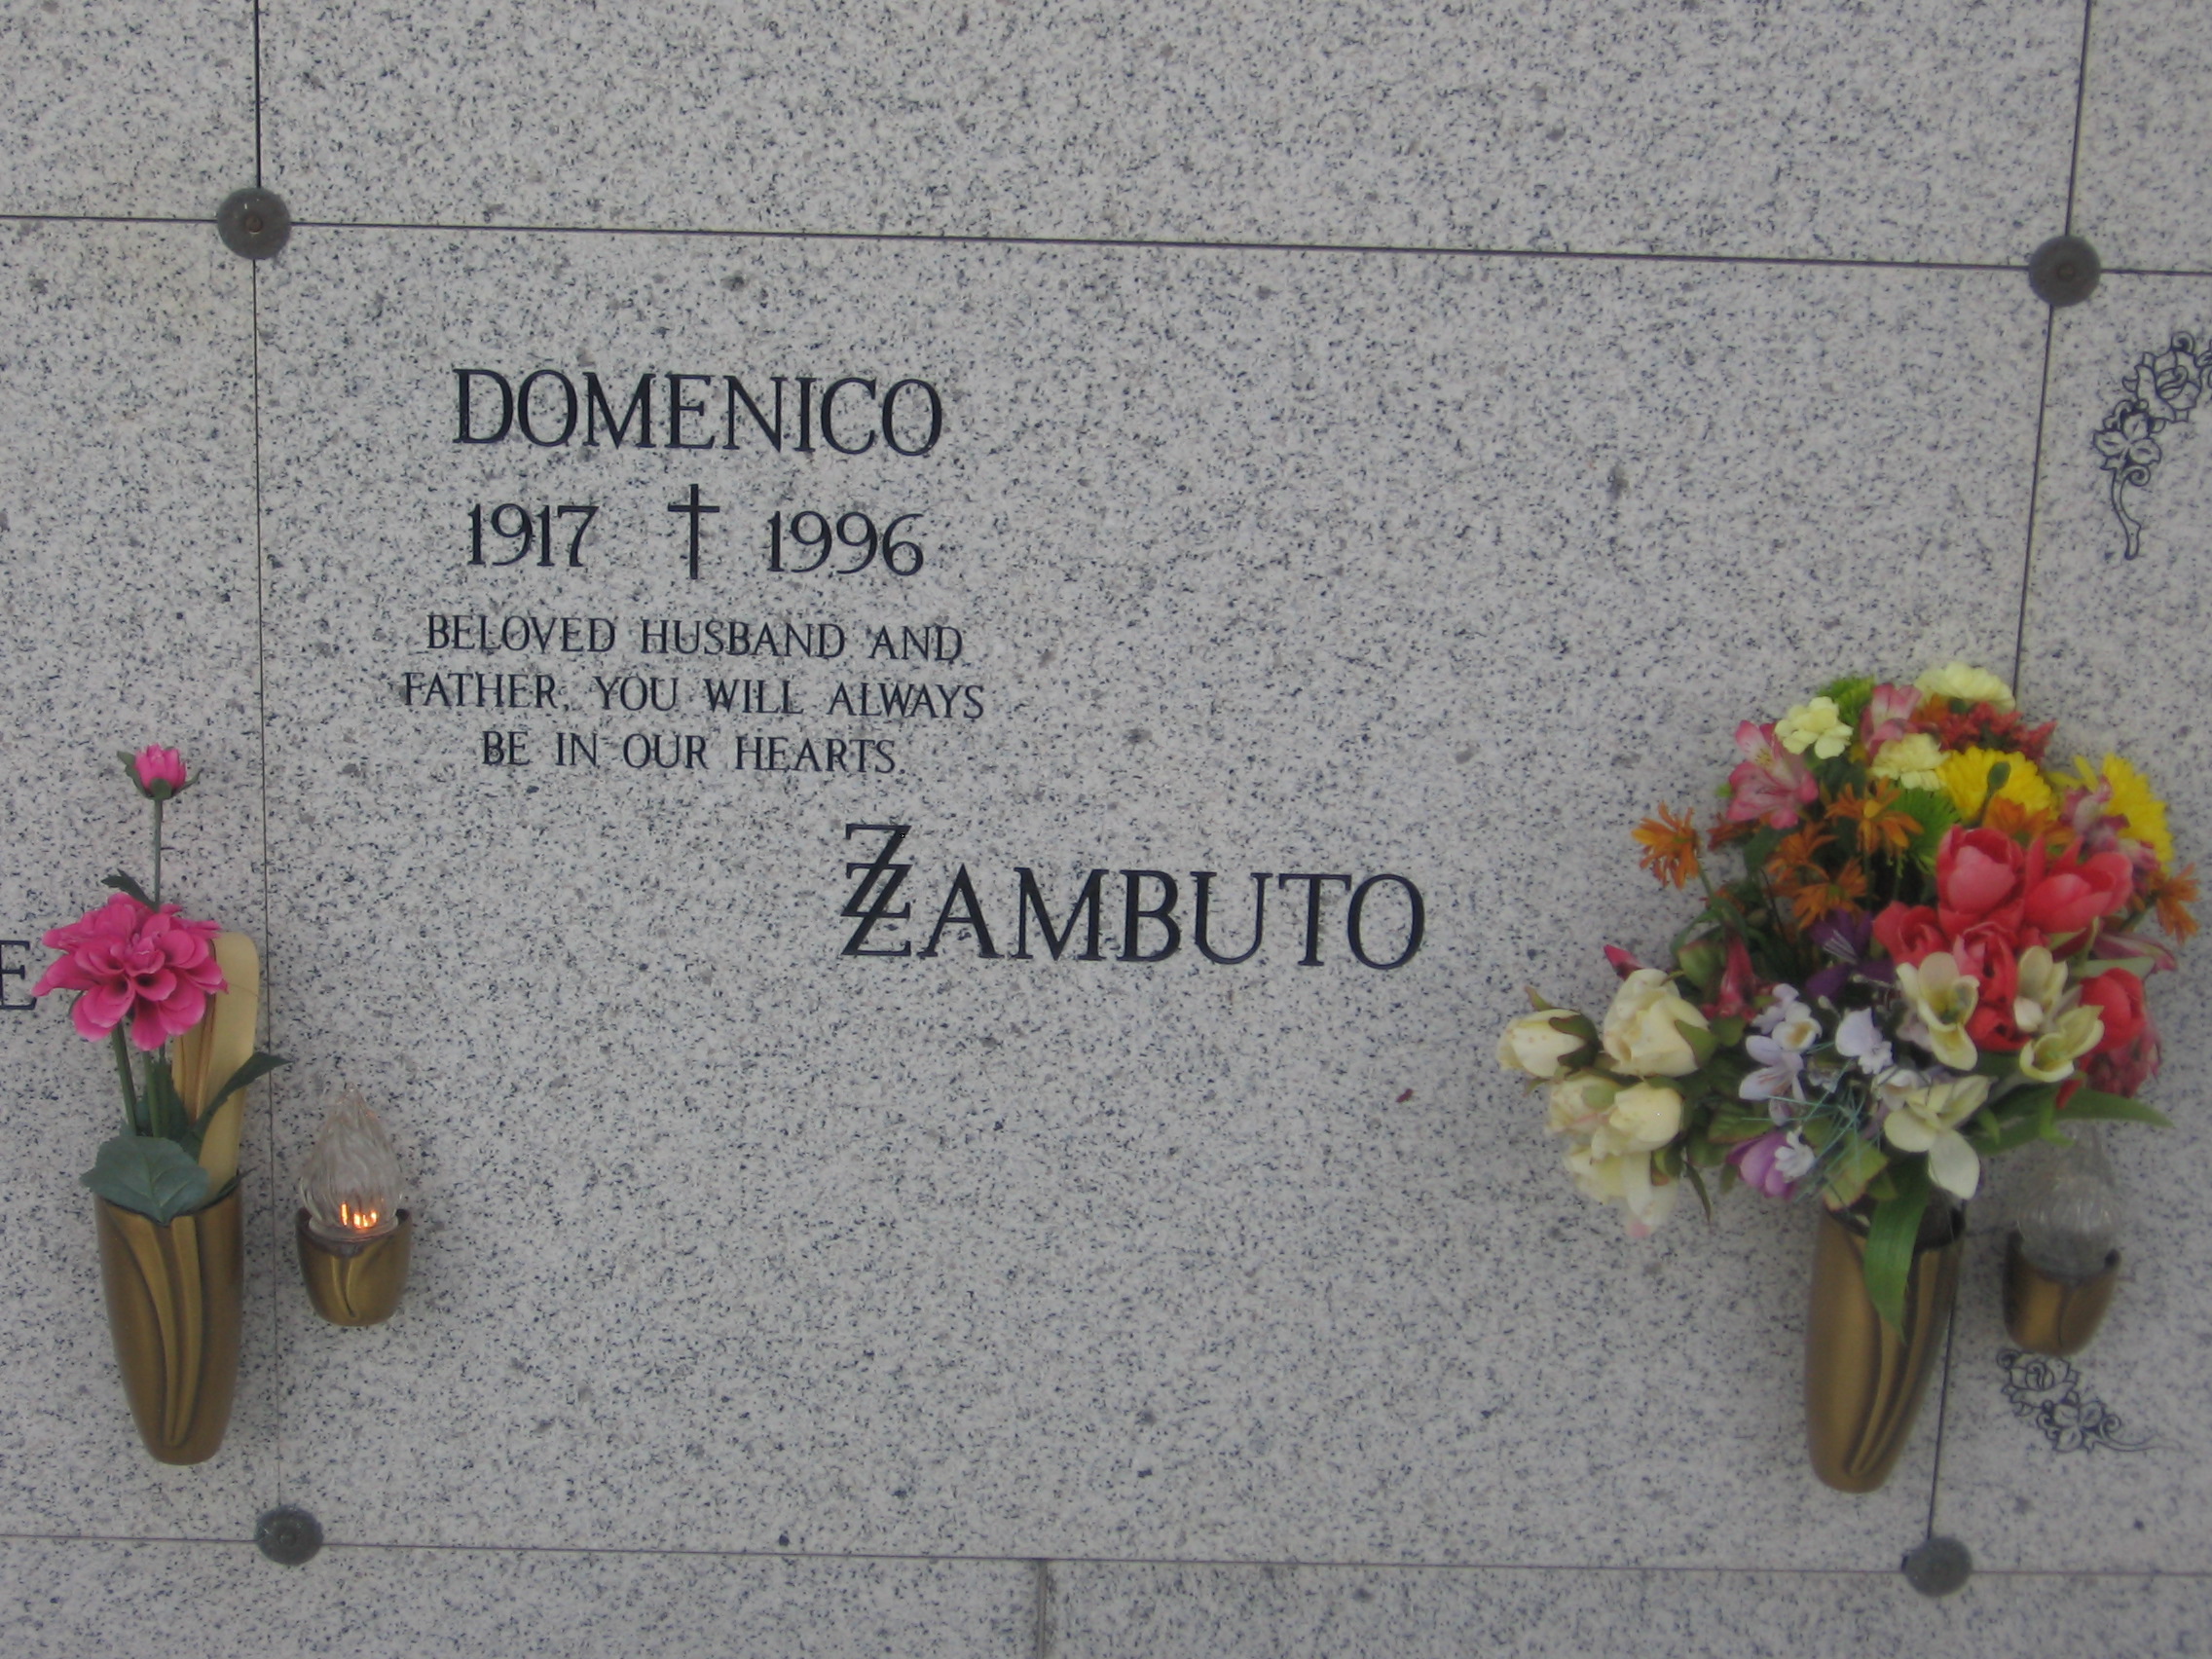 Domenico Zambuto